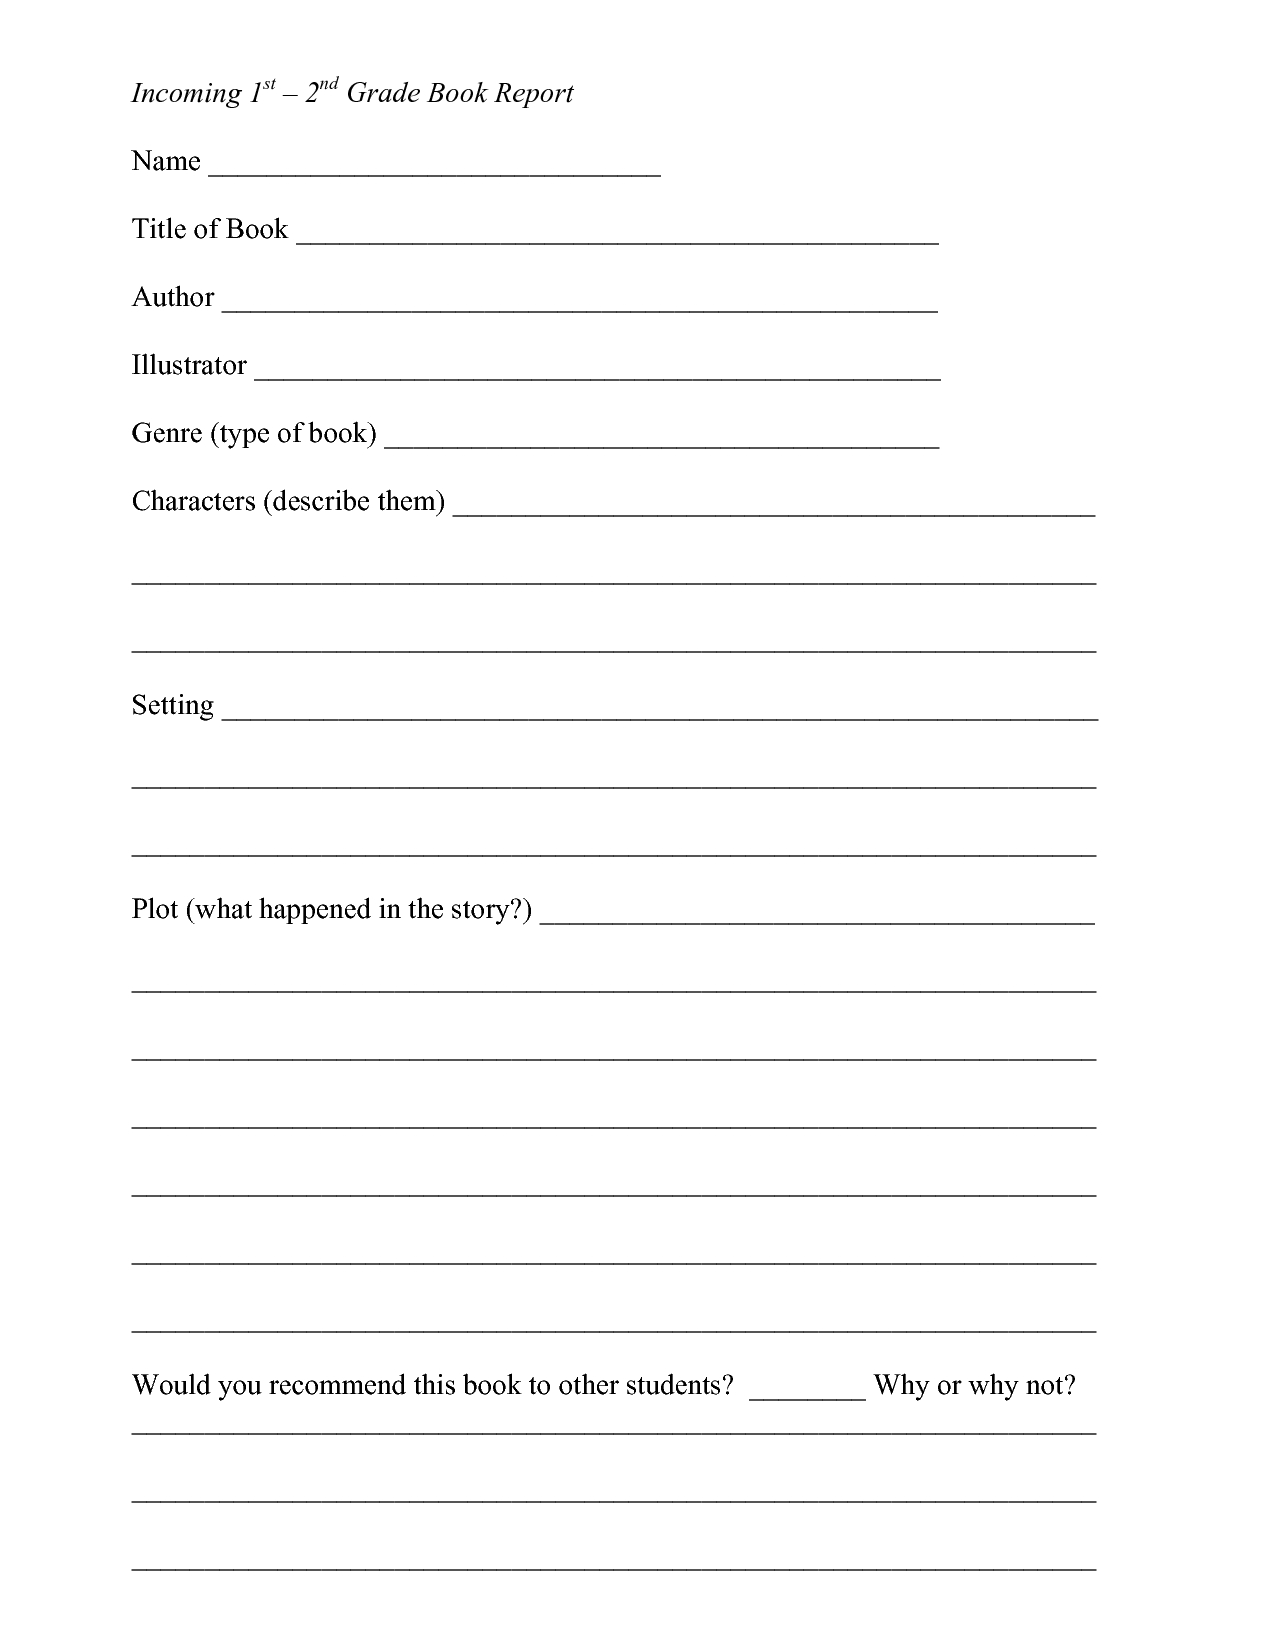 Book Report Template 2Nd Grade Free – Book Report Form Inside 4Th Grade Book Report Template